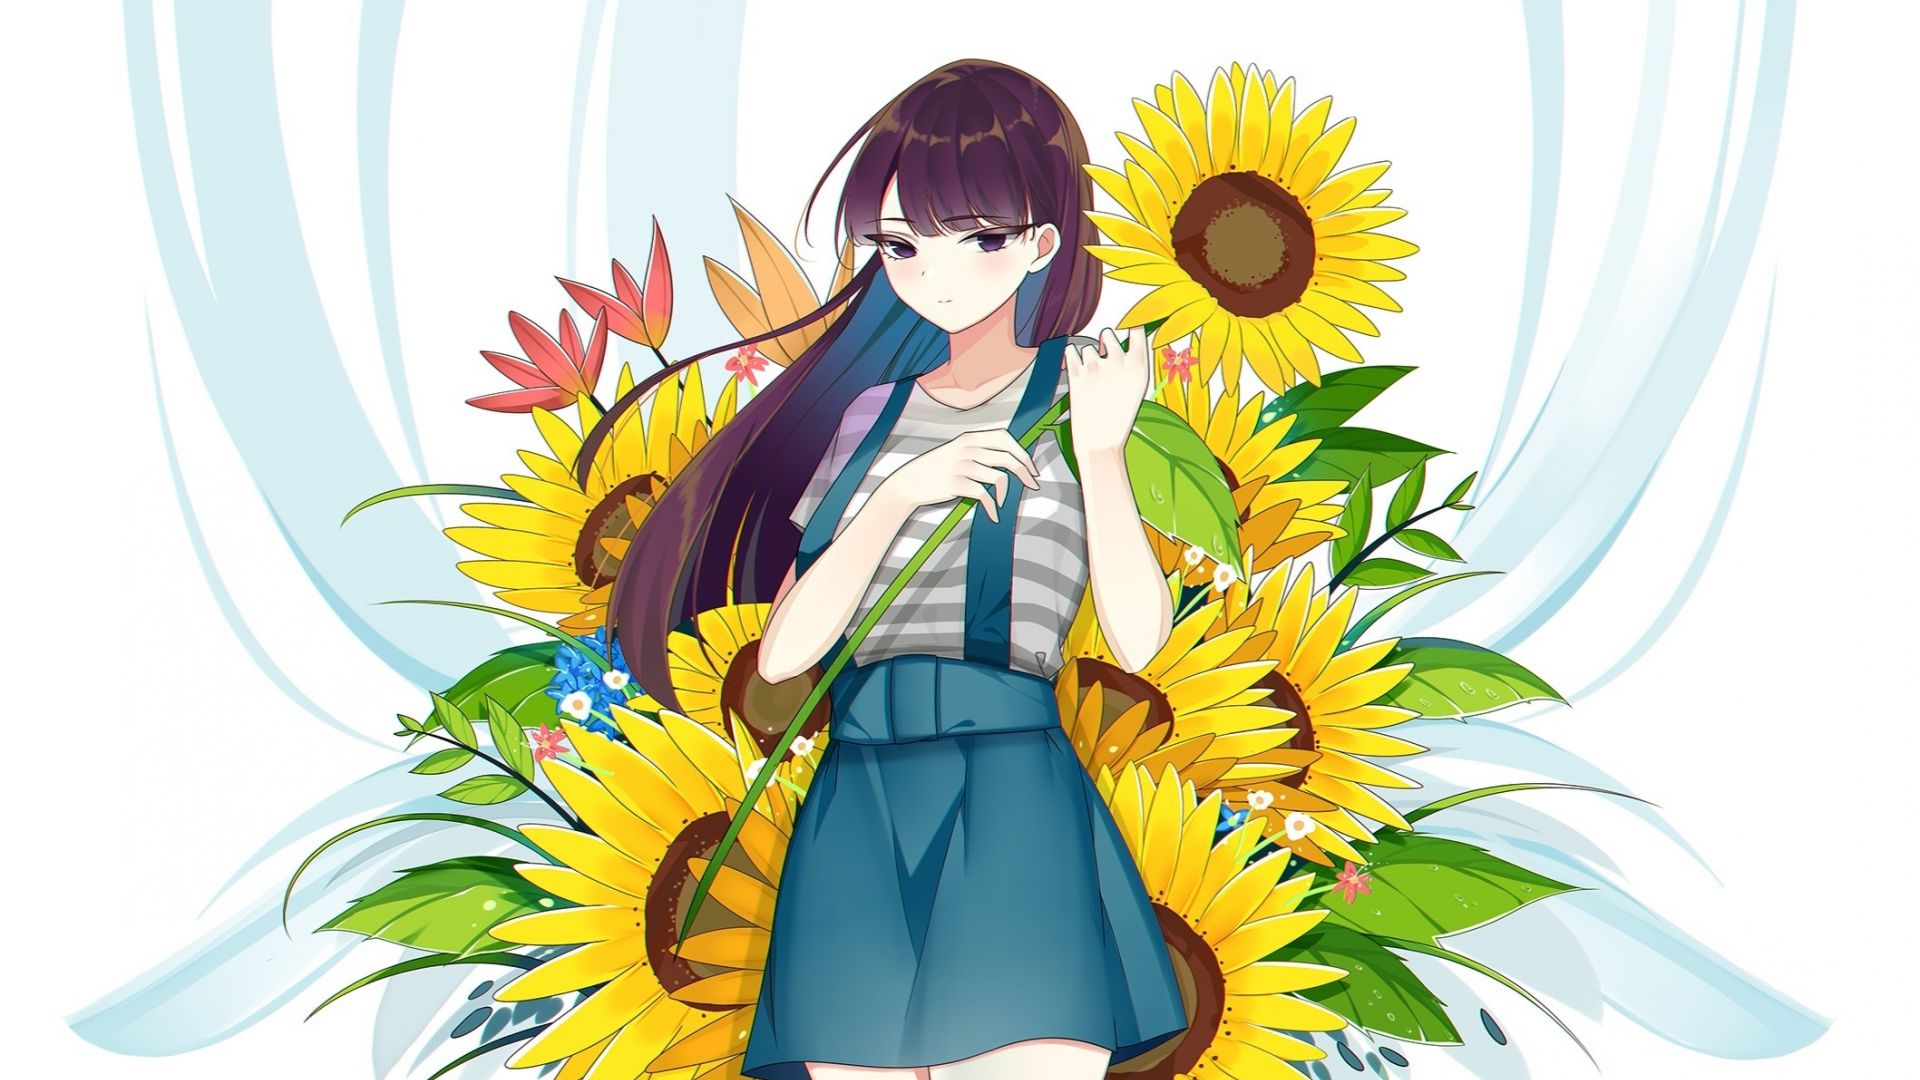 Wallpaper Sunflowers and anime girl, original, cute